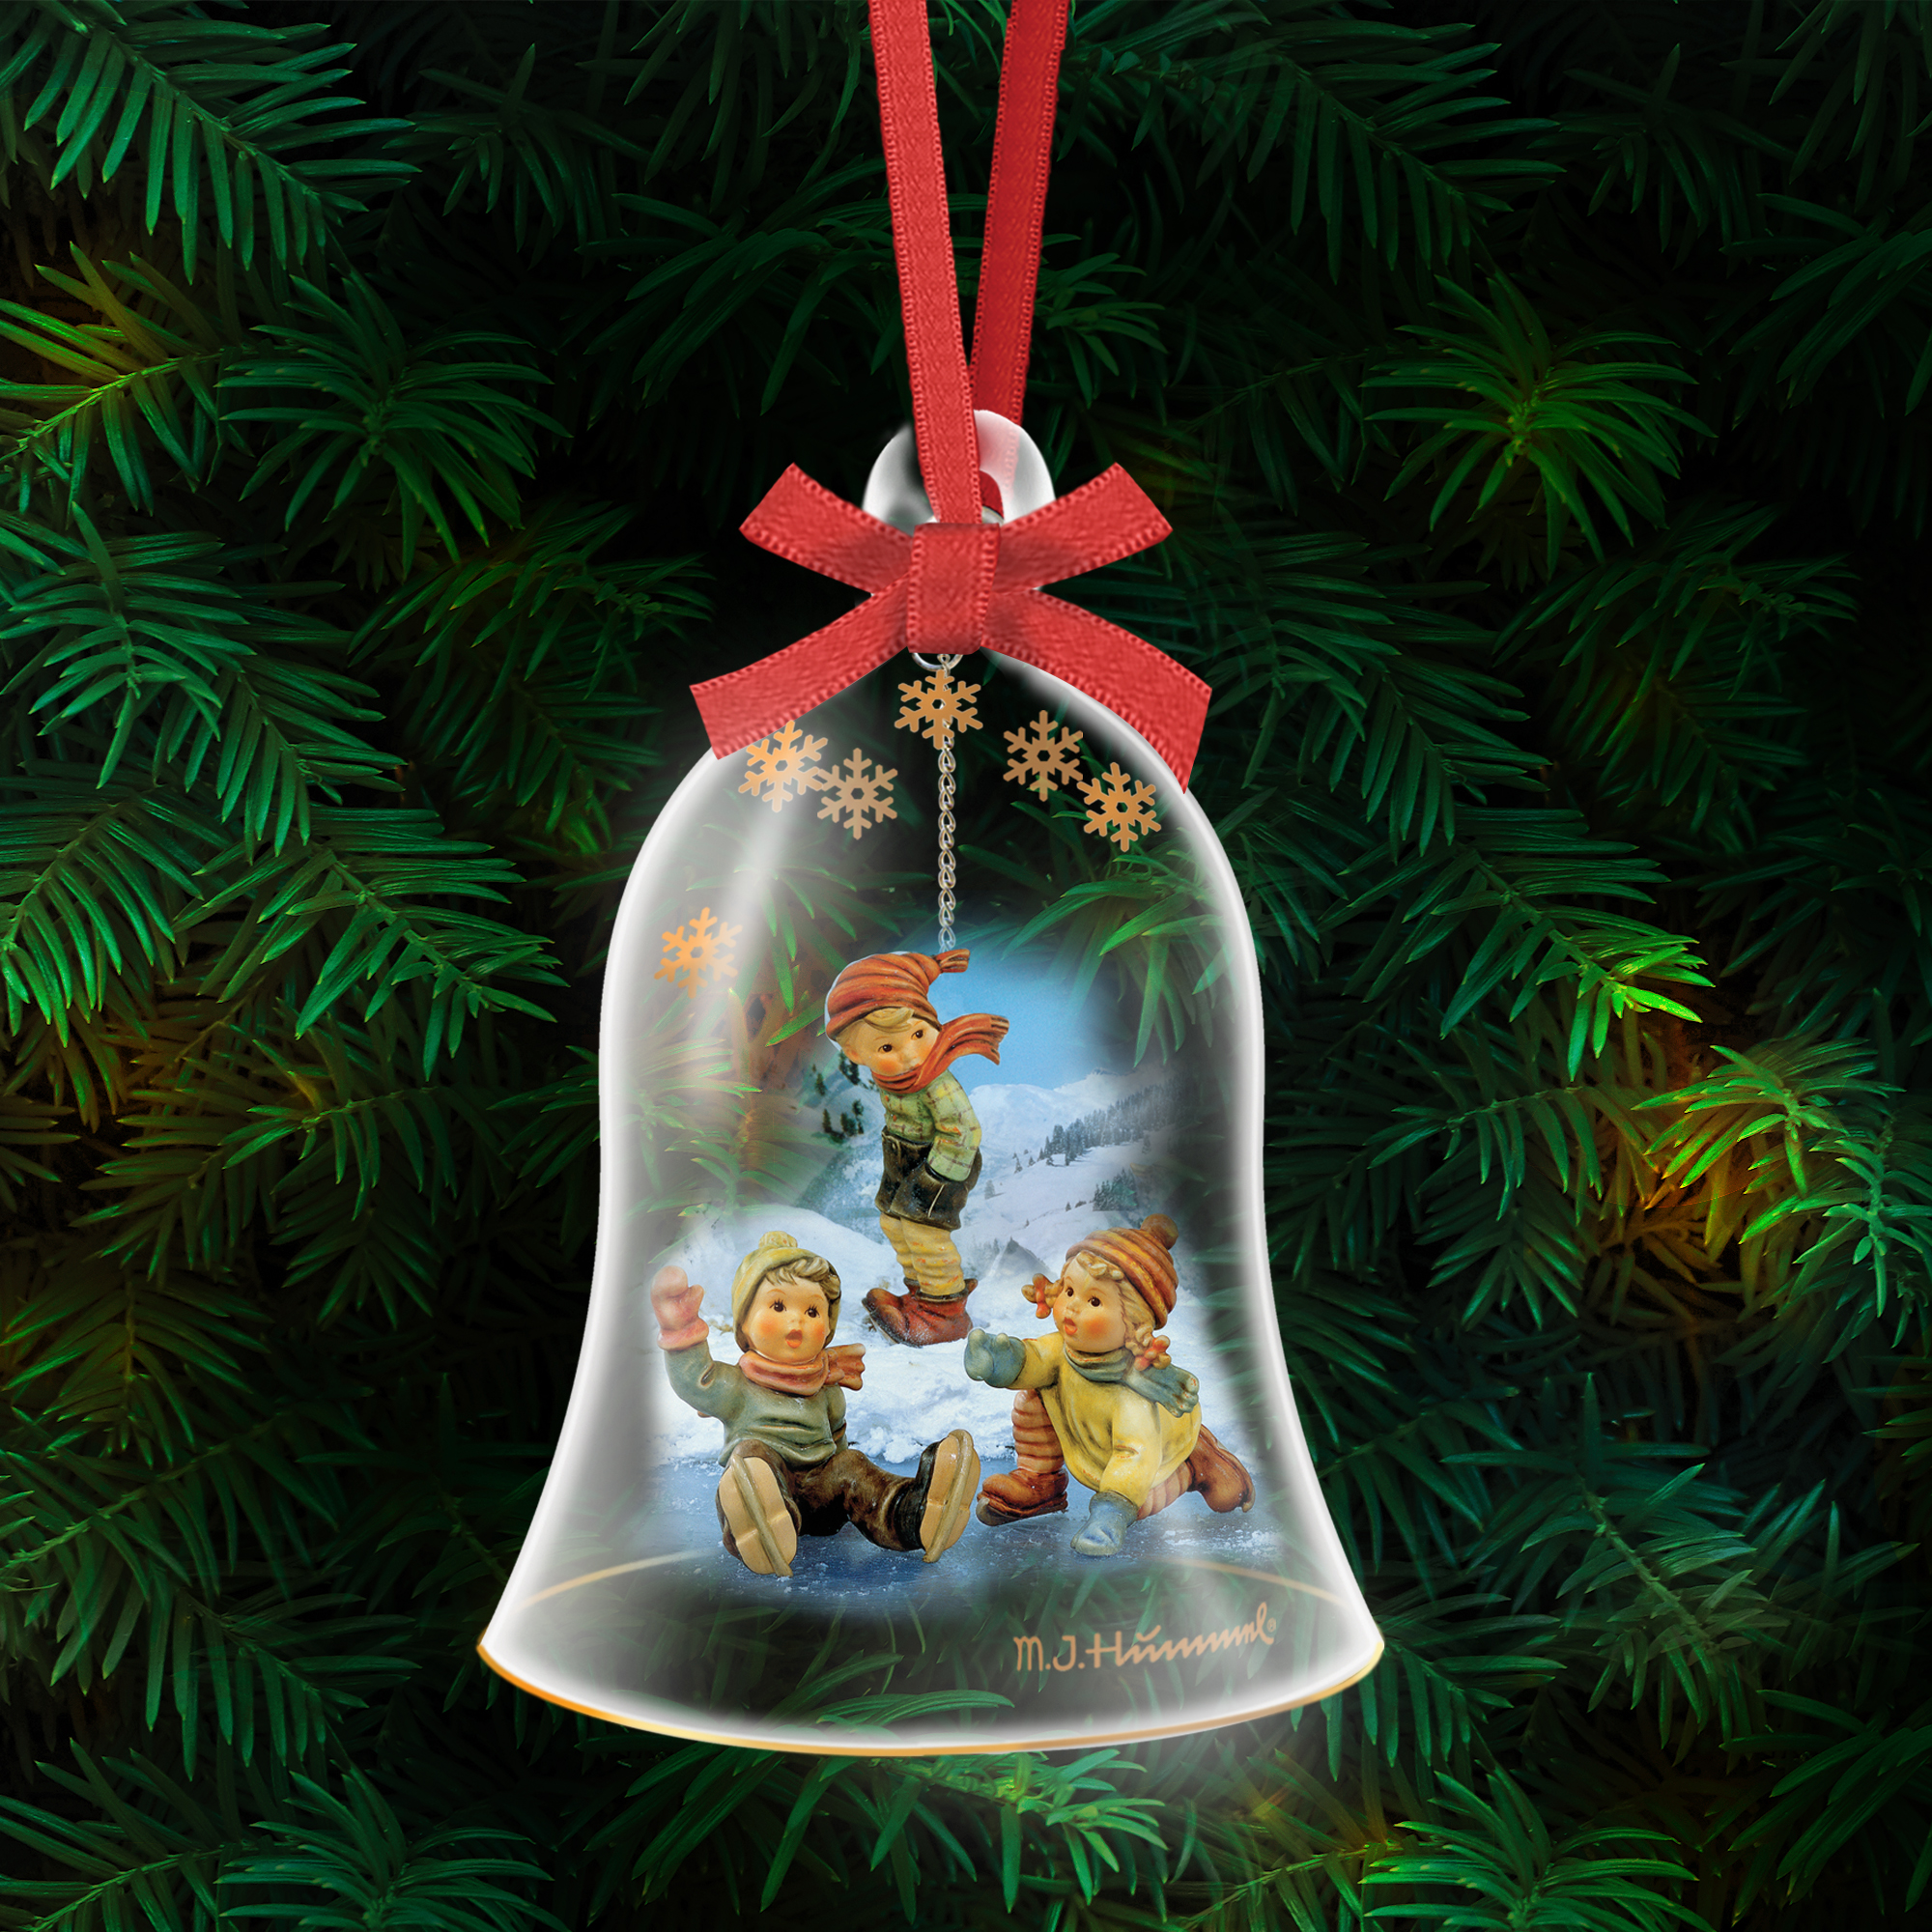 MI Hummel Christmas Bell Ornaments 10491 0013 a main